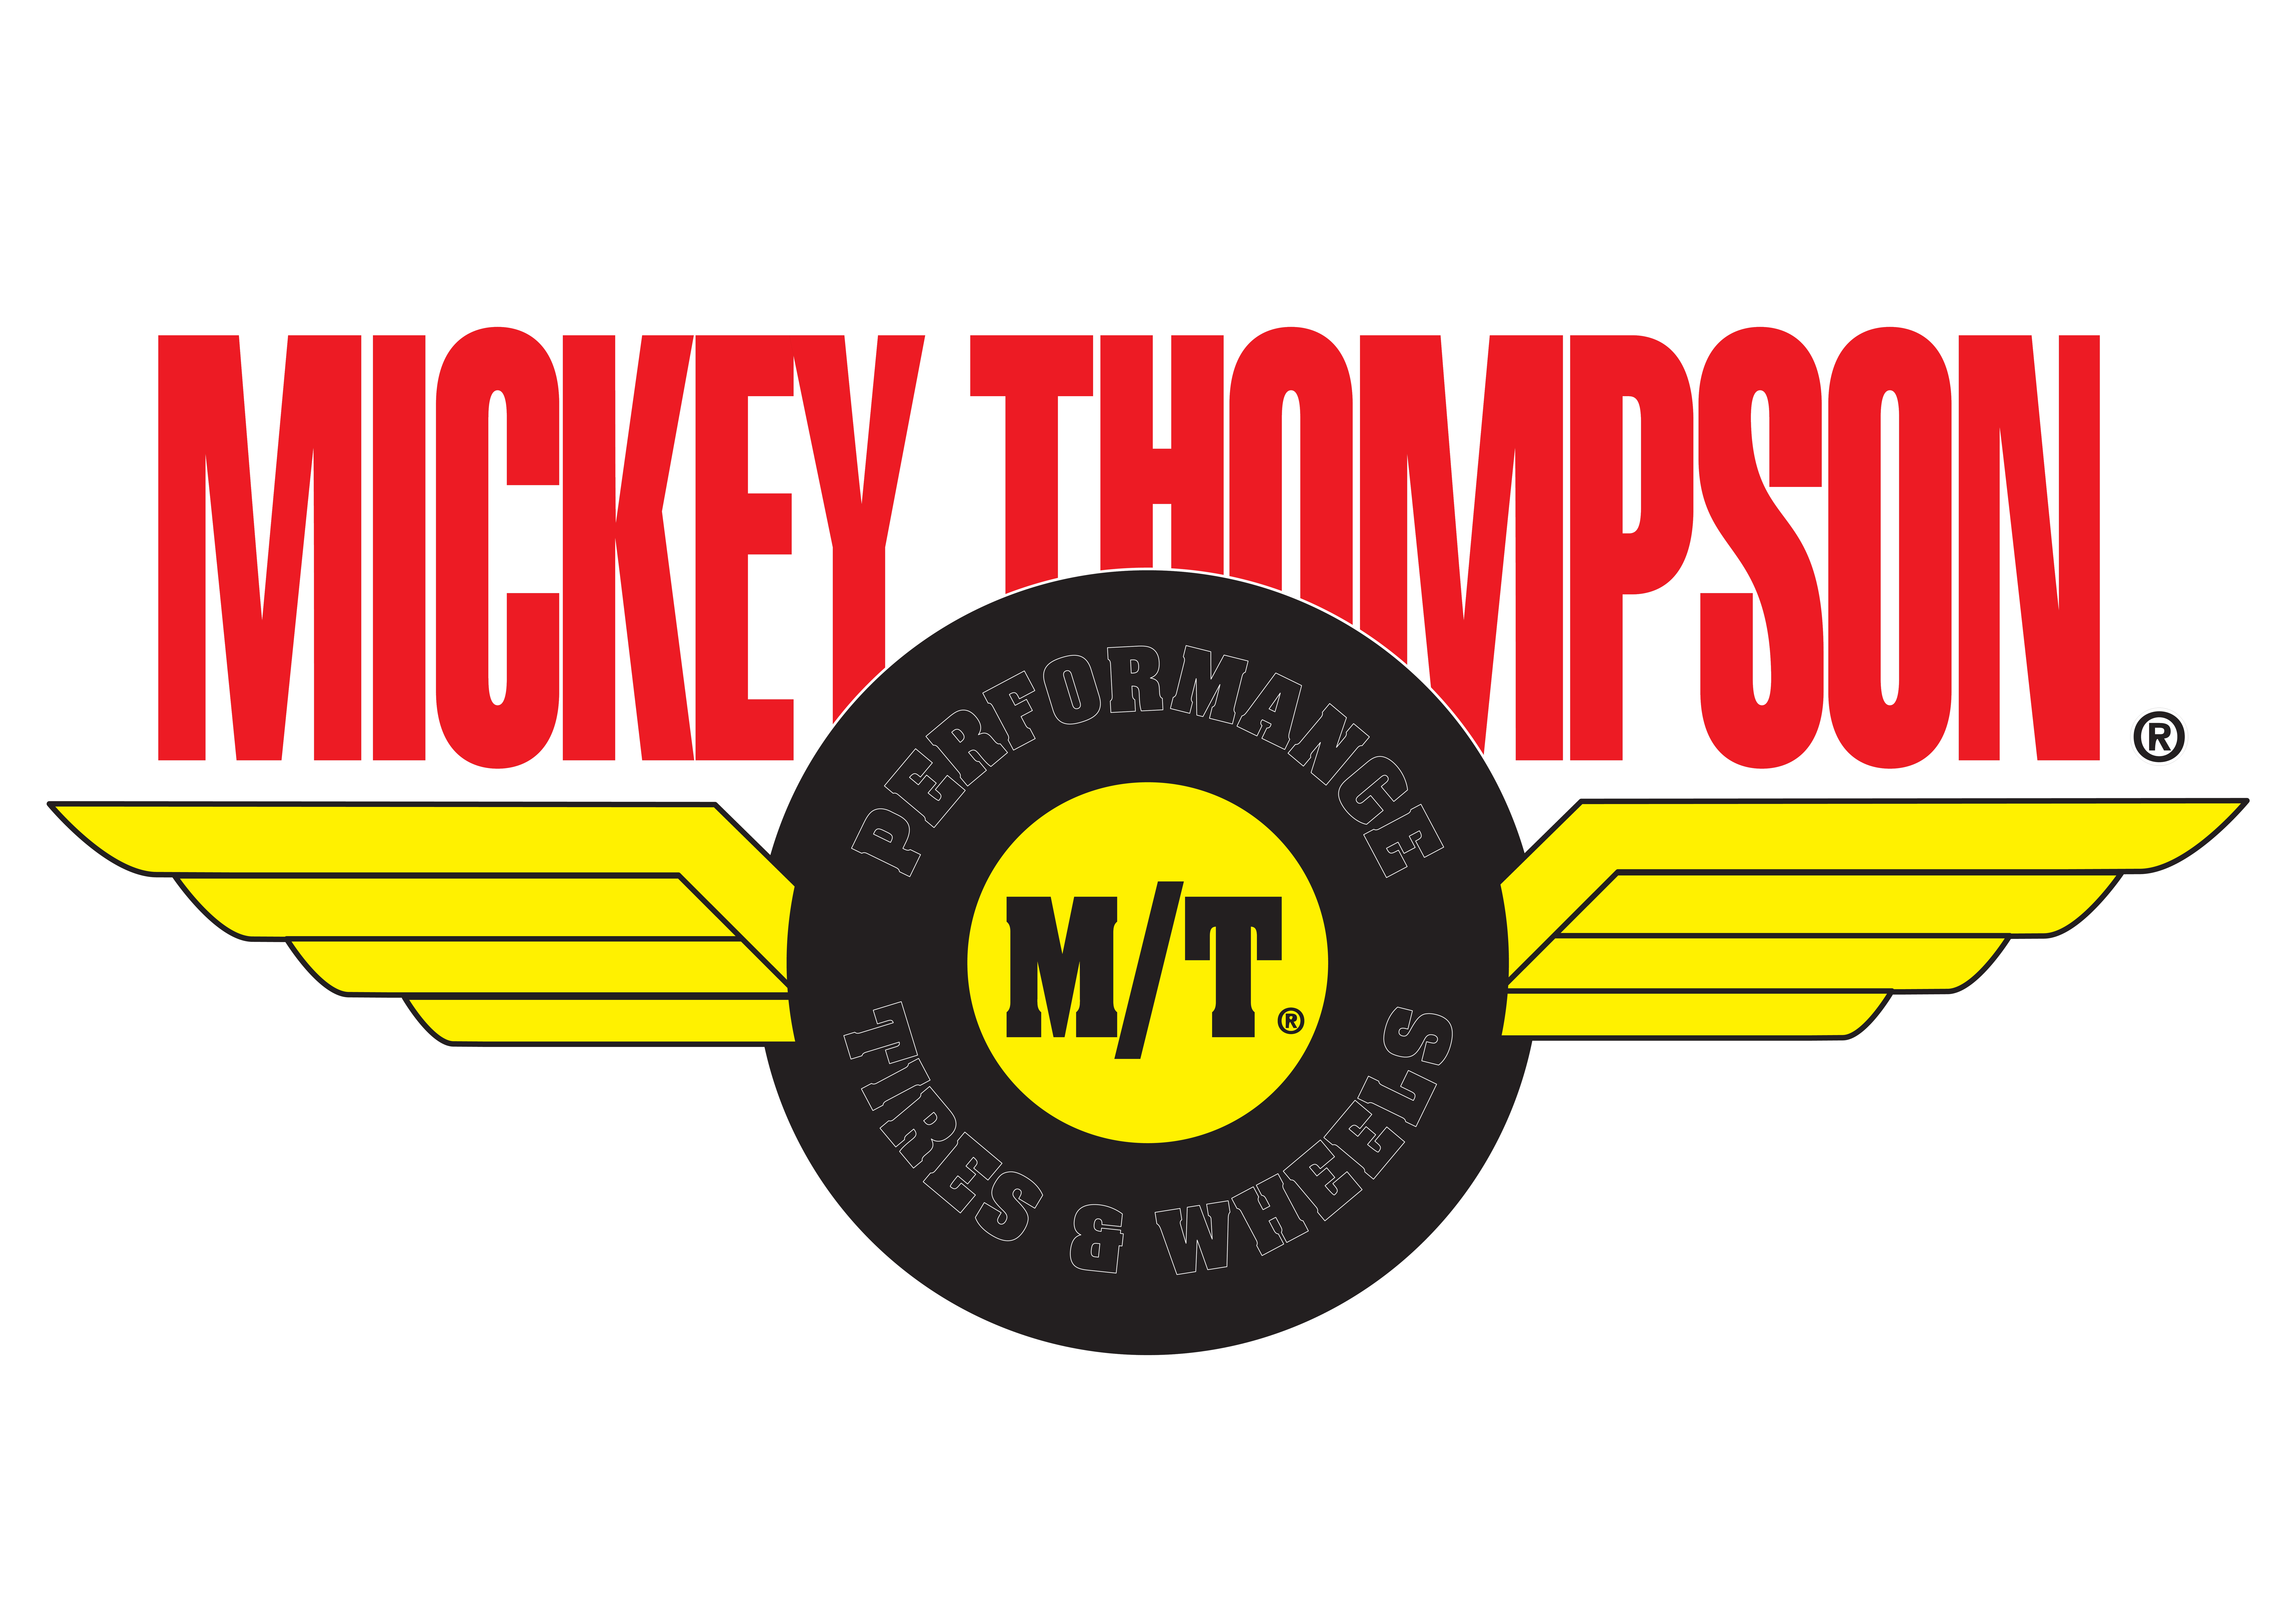 http://www.beadlok.com/Logo/Mickey%20Thompson.jpg